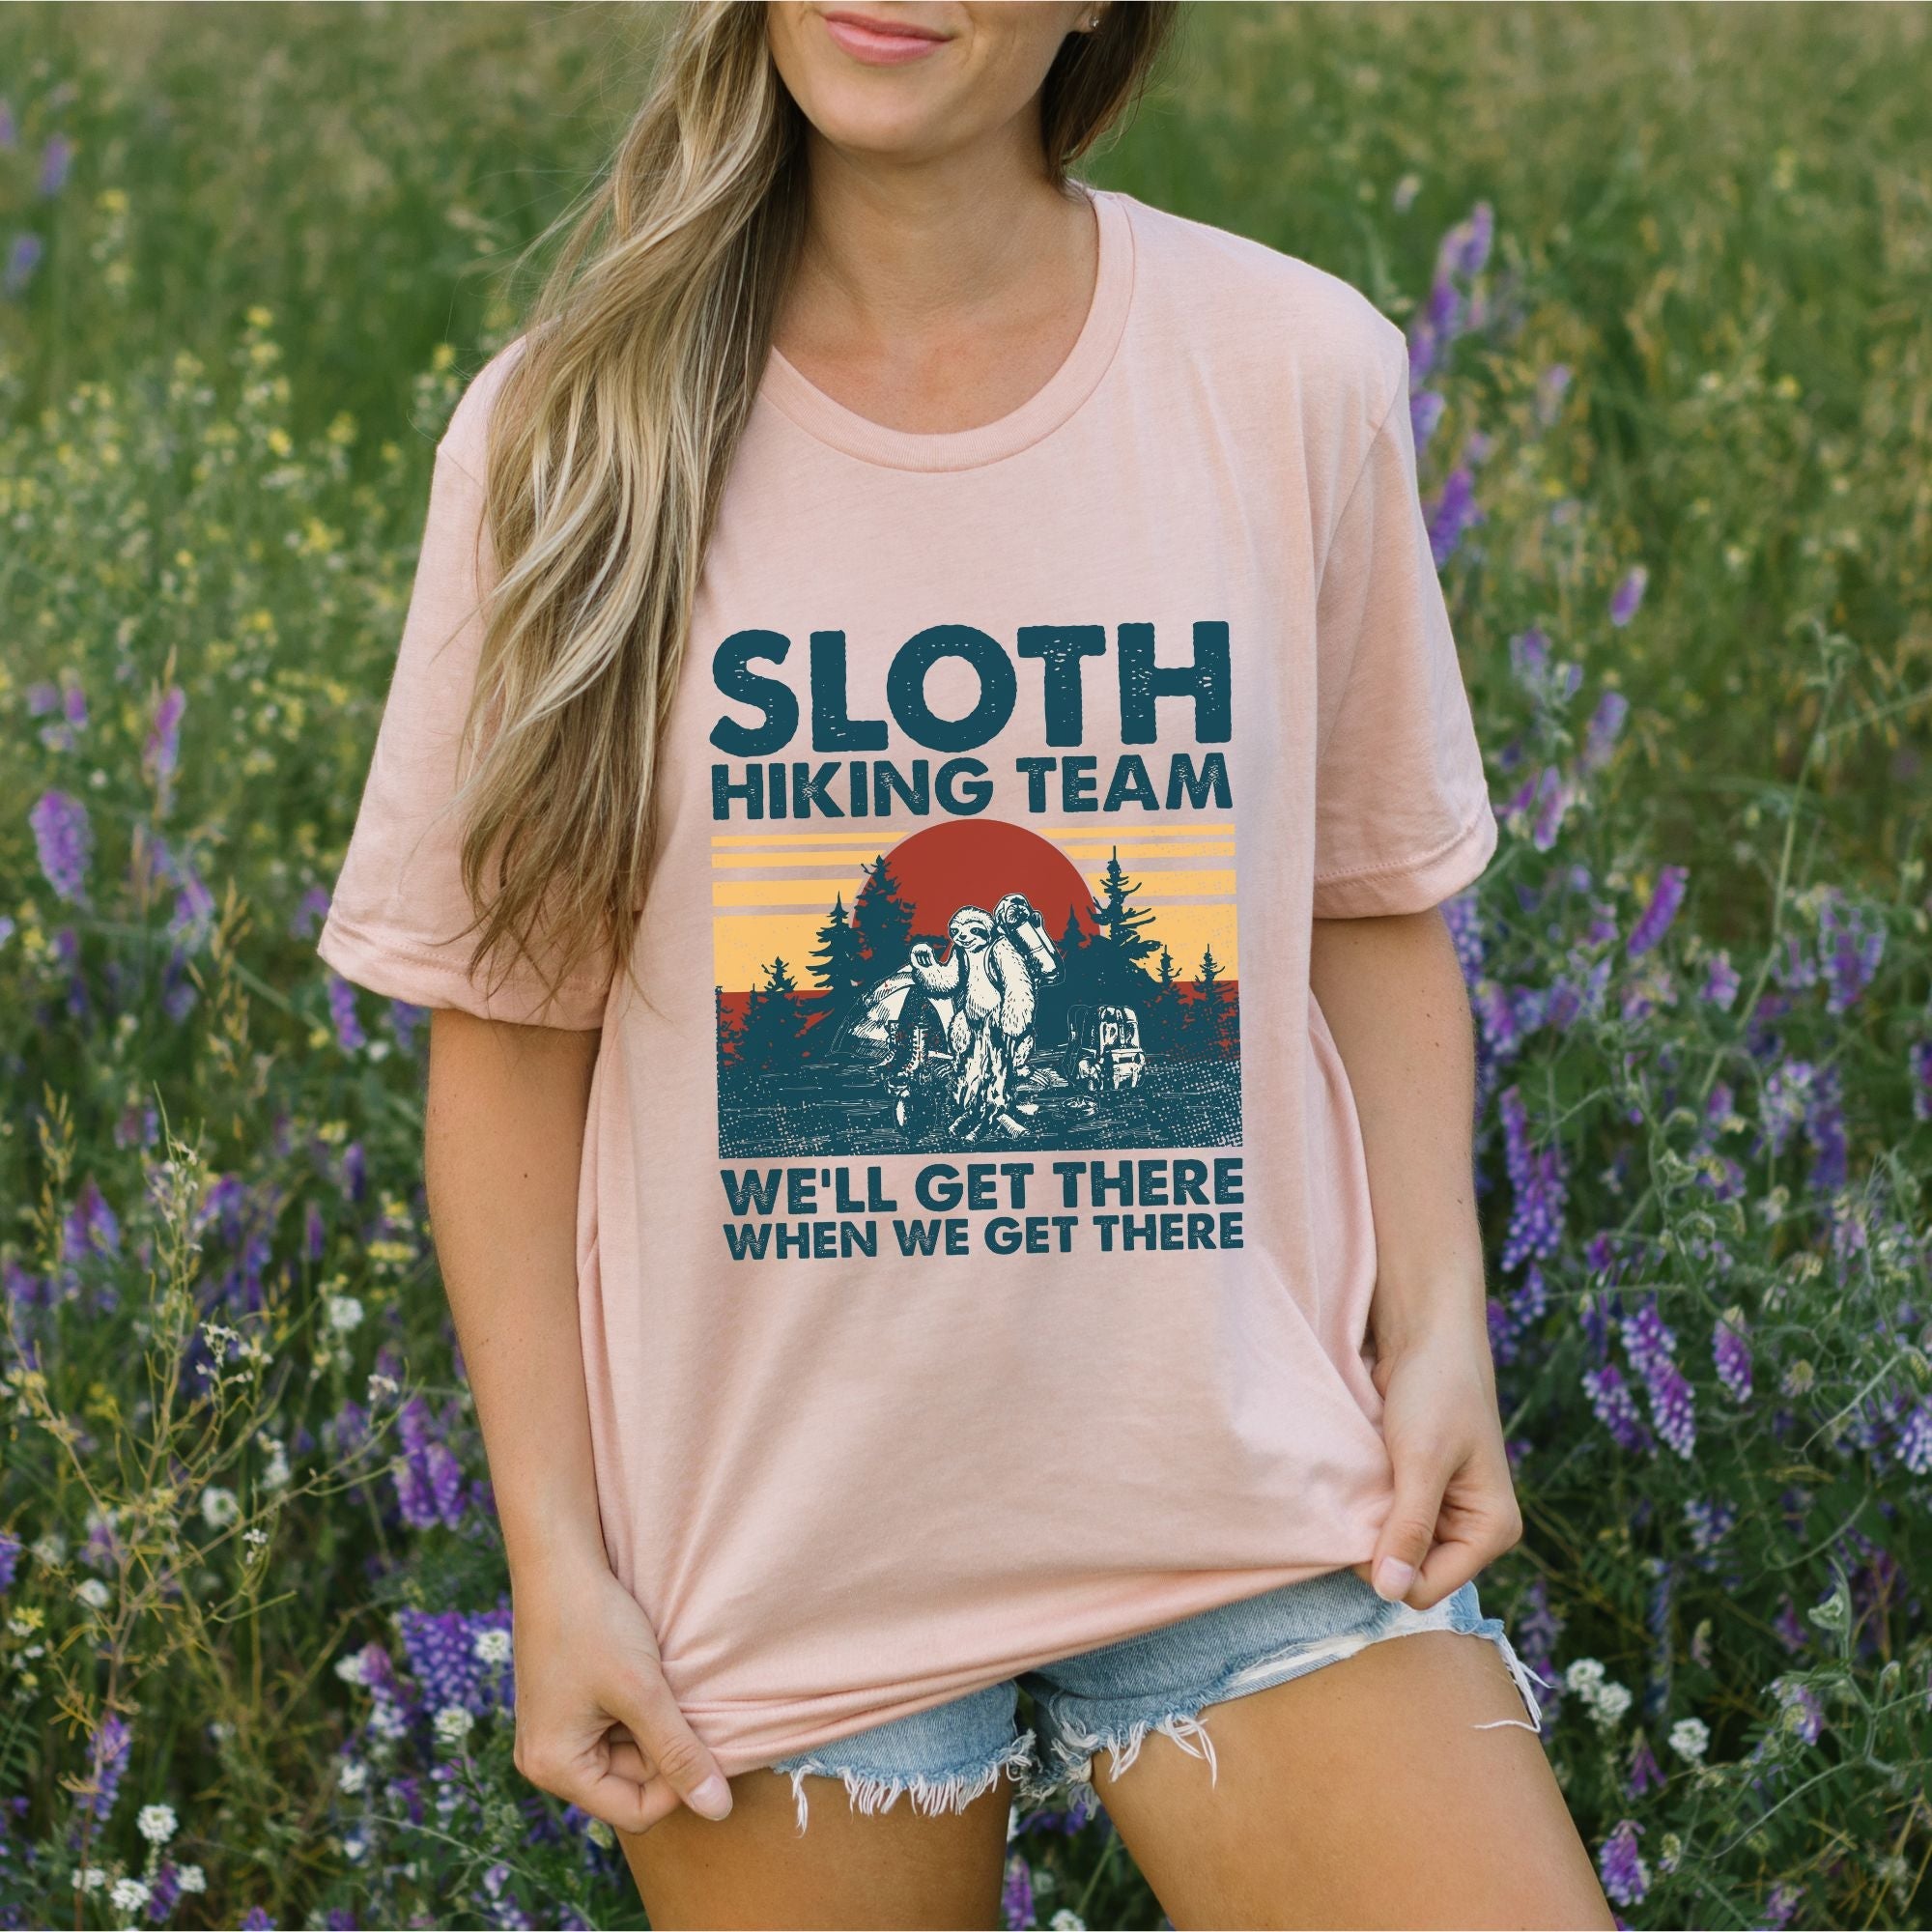 Sloth Hiking Team Tshirt for Hiker *UNISEX FIT*-208 Tees Wholesale, Idaho